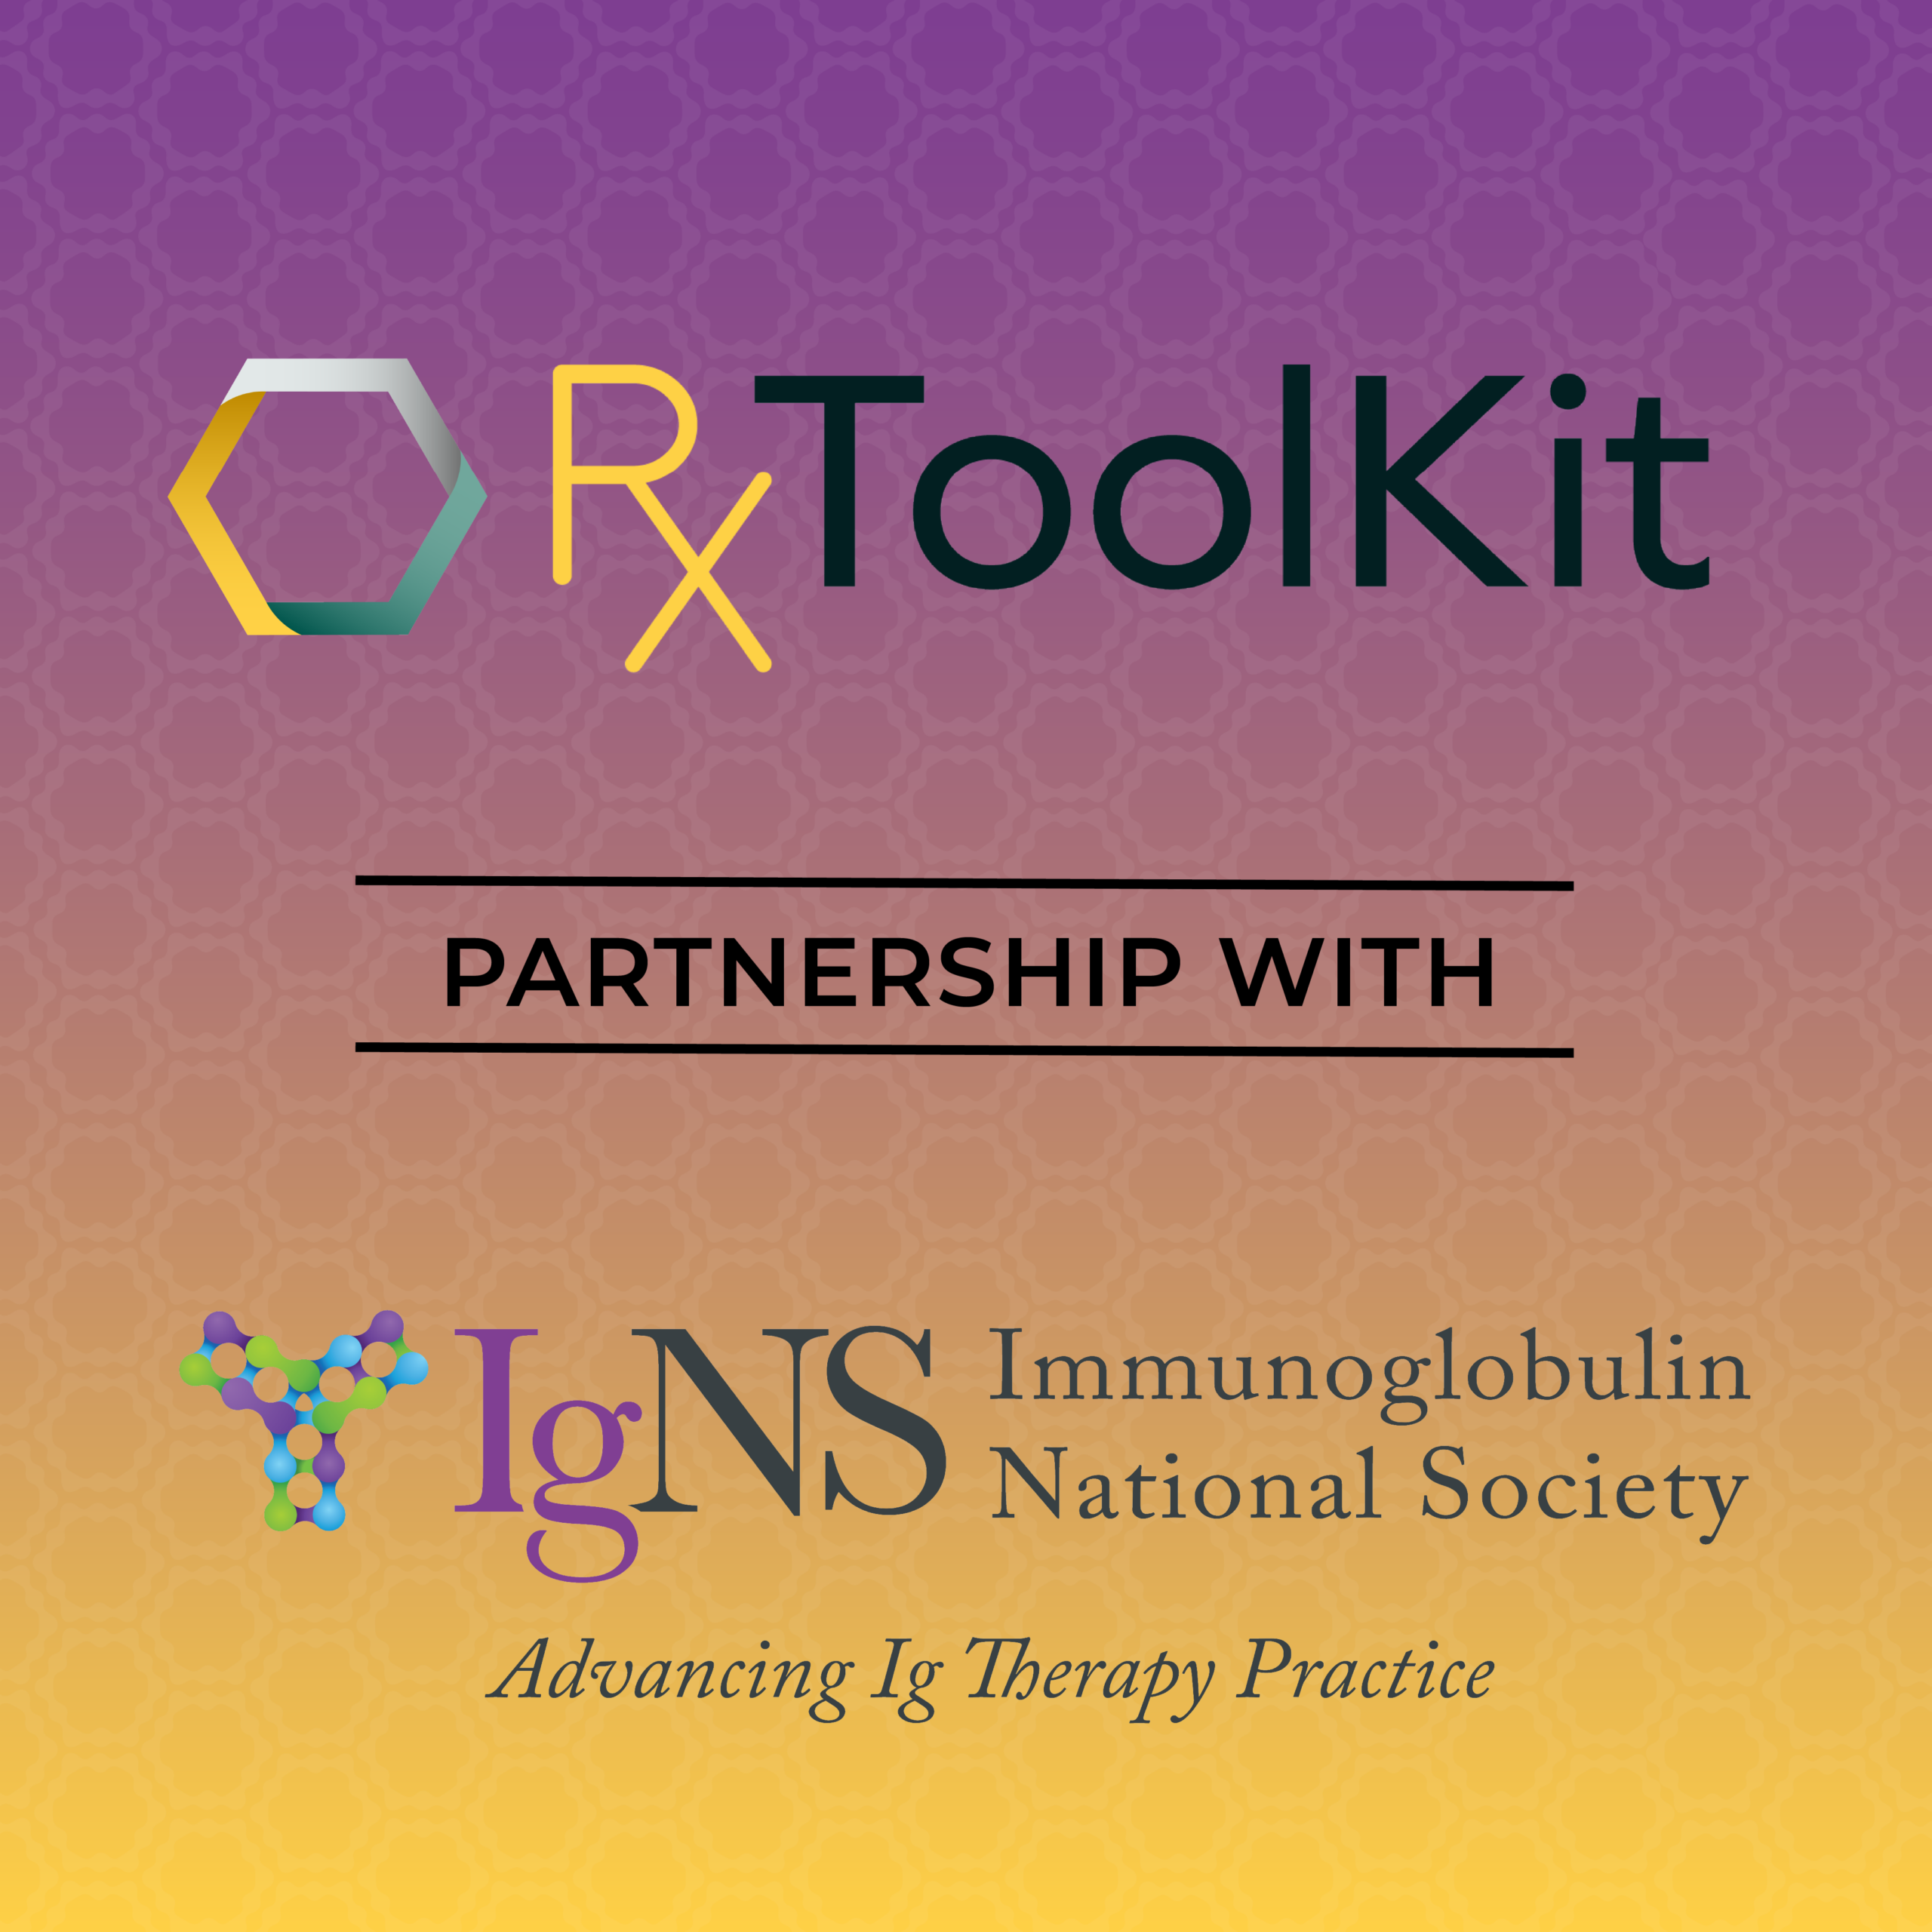 RxToolKit partnership with the Immunoglobulin National Society